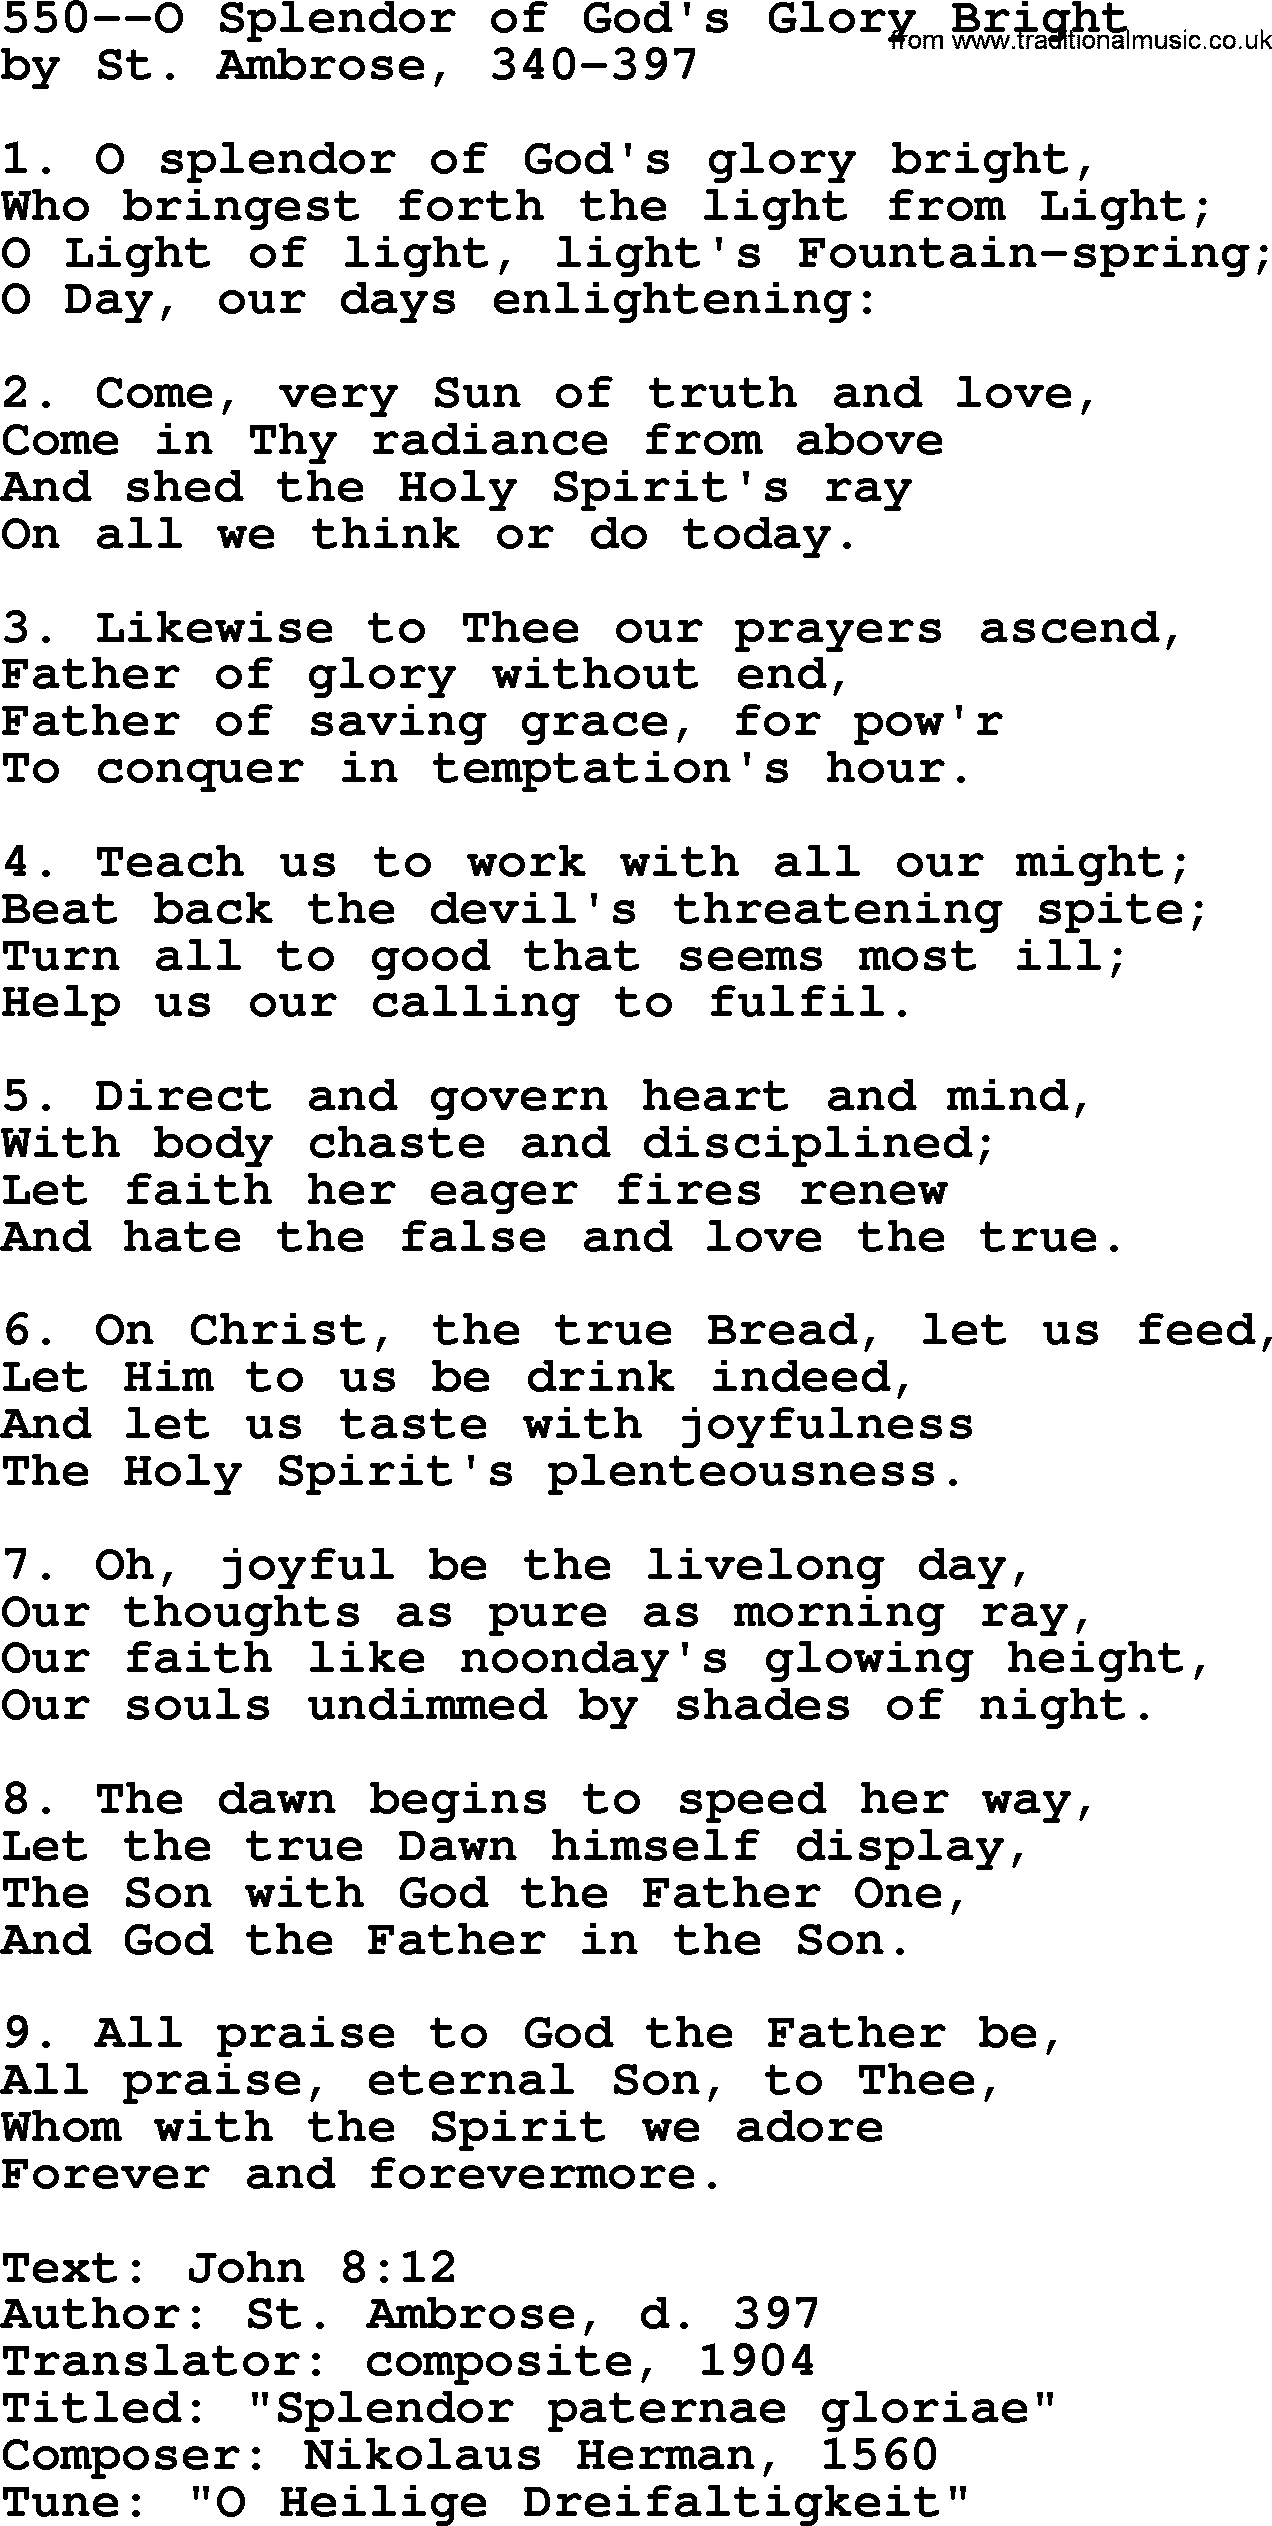 Lutheran Hymn: 550--O Splendor of God's Glory Bright.txt lyrics with PDF